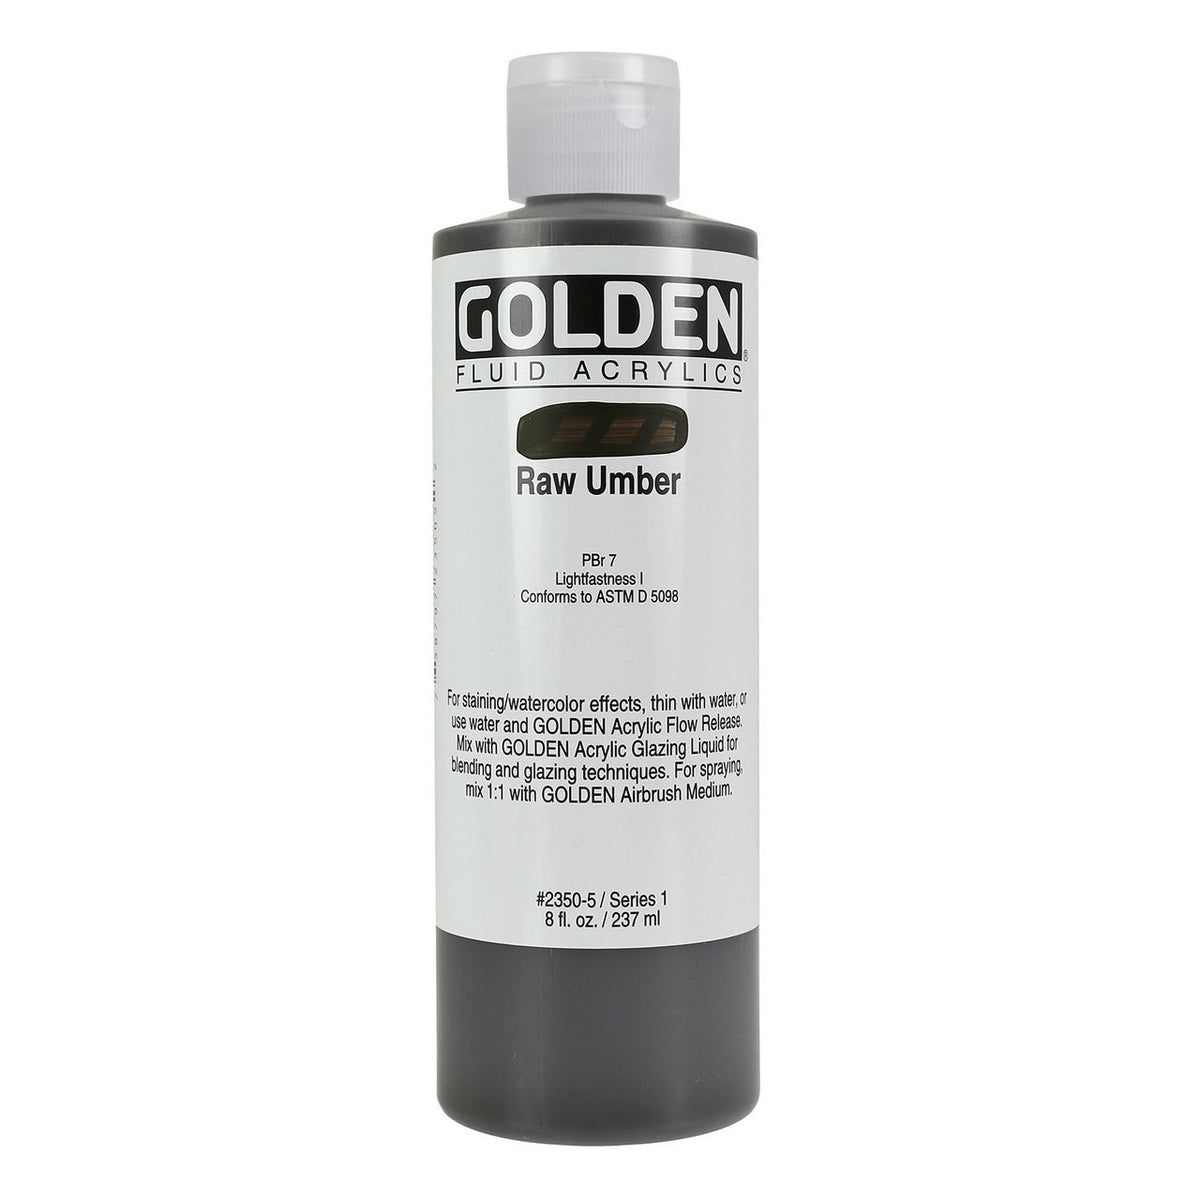 Golden Fluid Acrylic Raw Umber 8 oz - merriartist.com